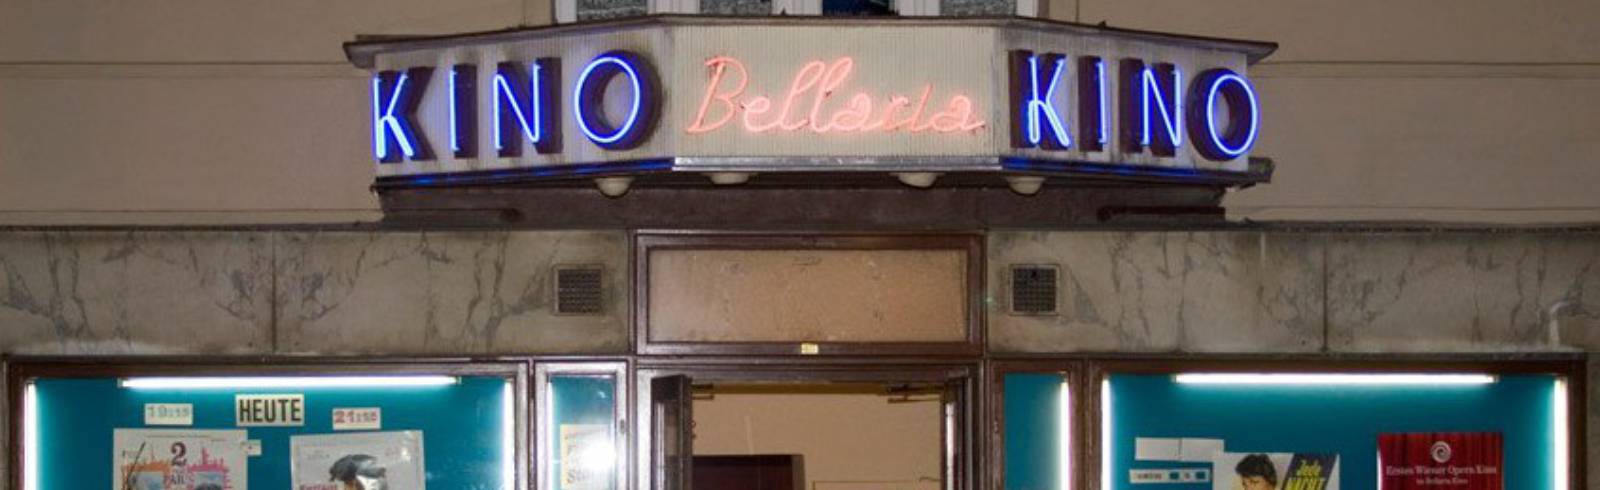 Bellaria Kino muss zusperren